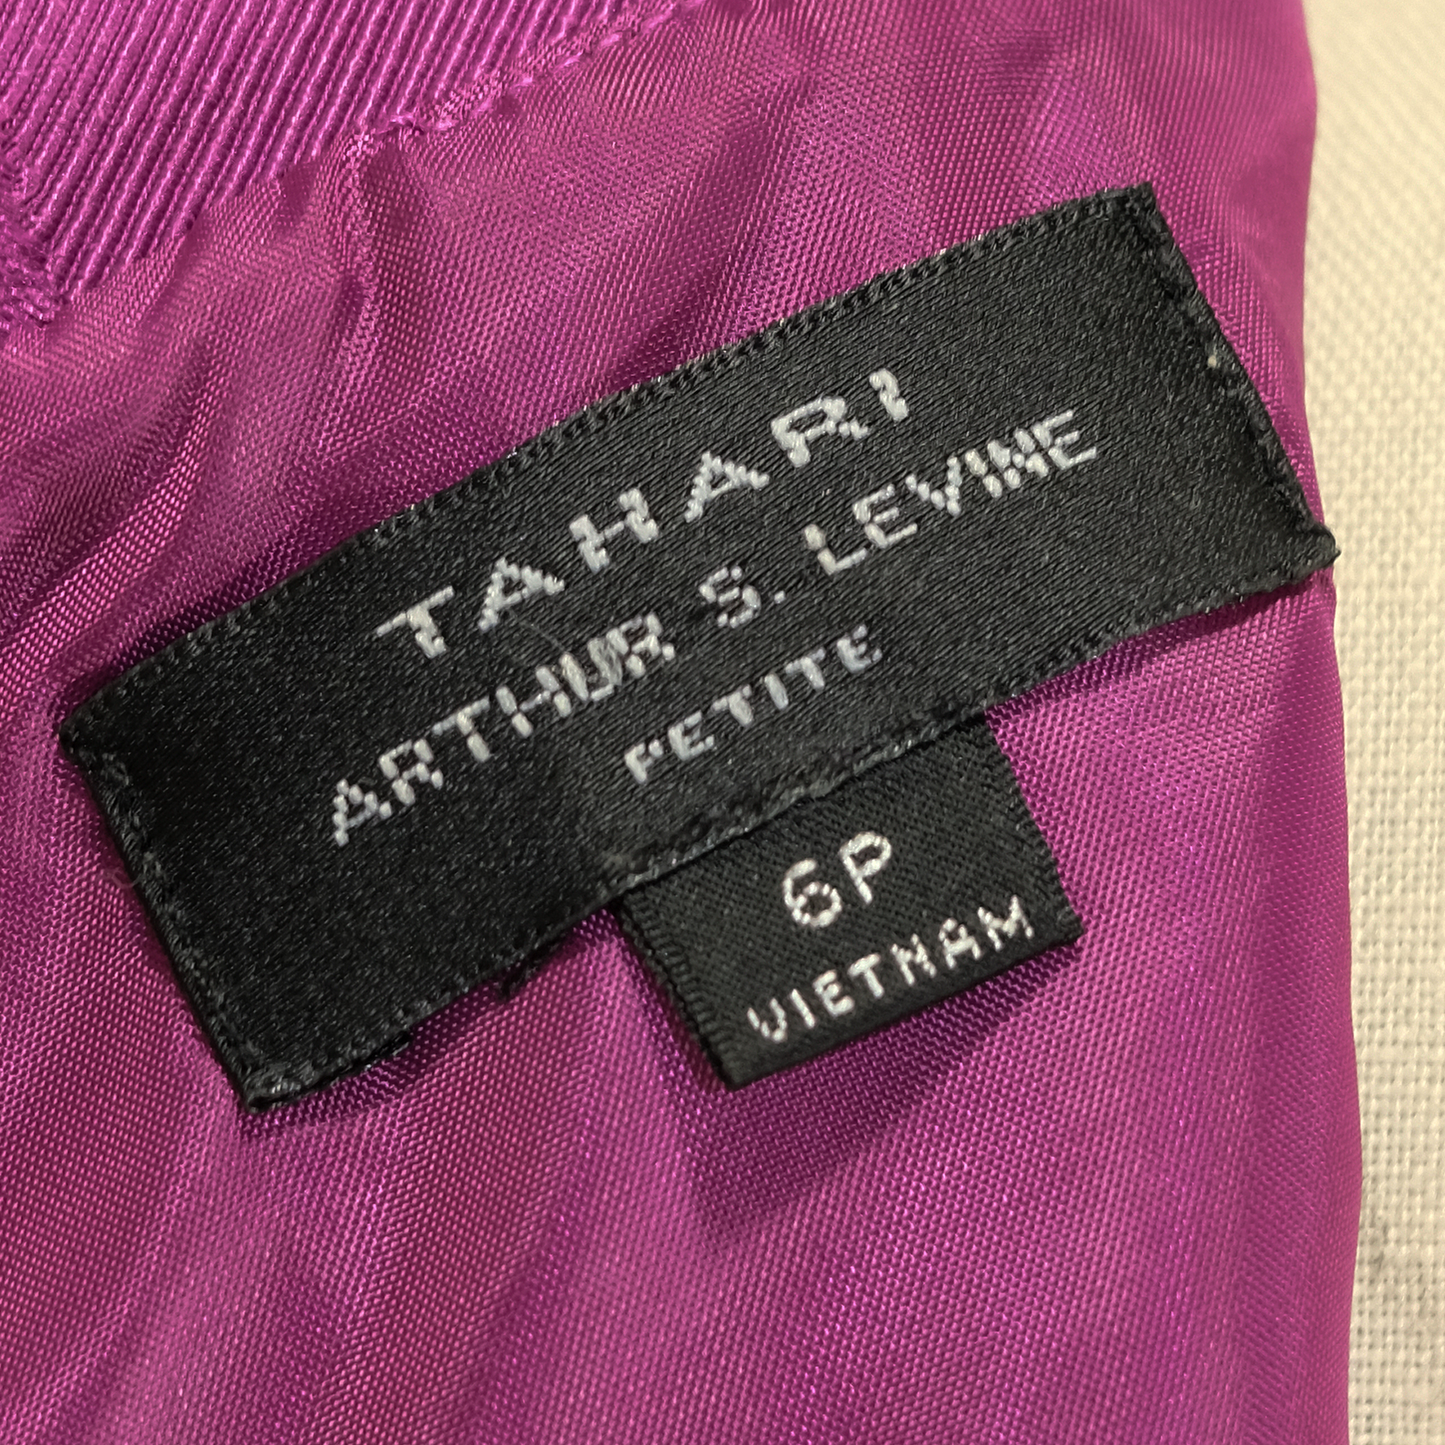 Tahari Arthur S. Levine Lilac Empire Waist Shift Dress - Size 6P - Pre-owned